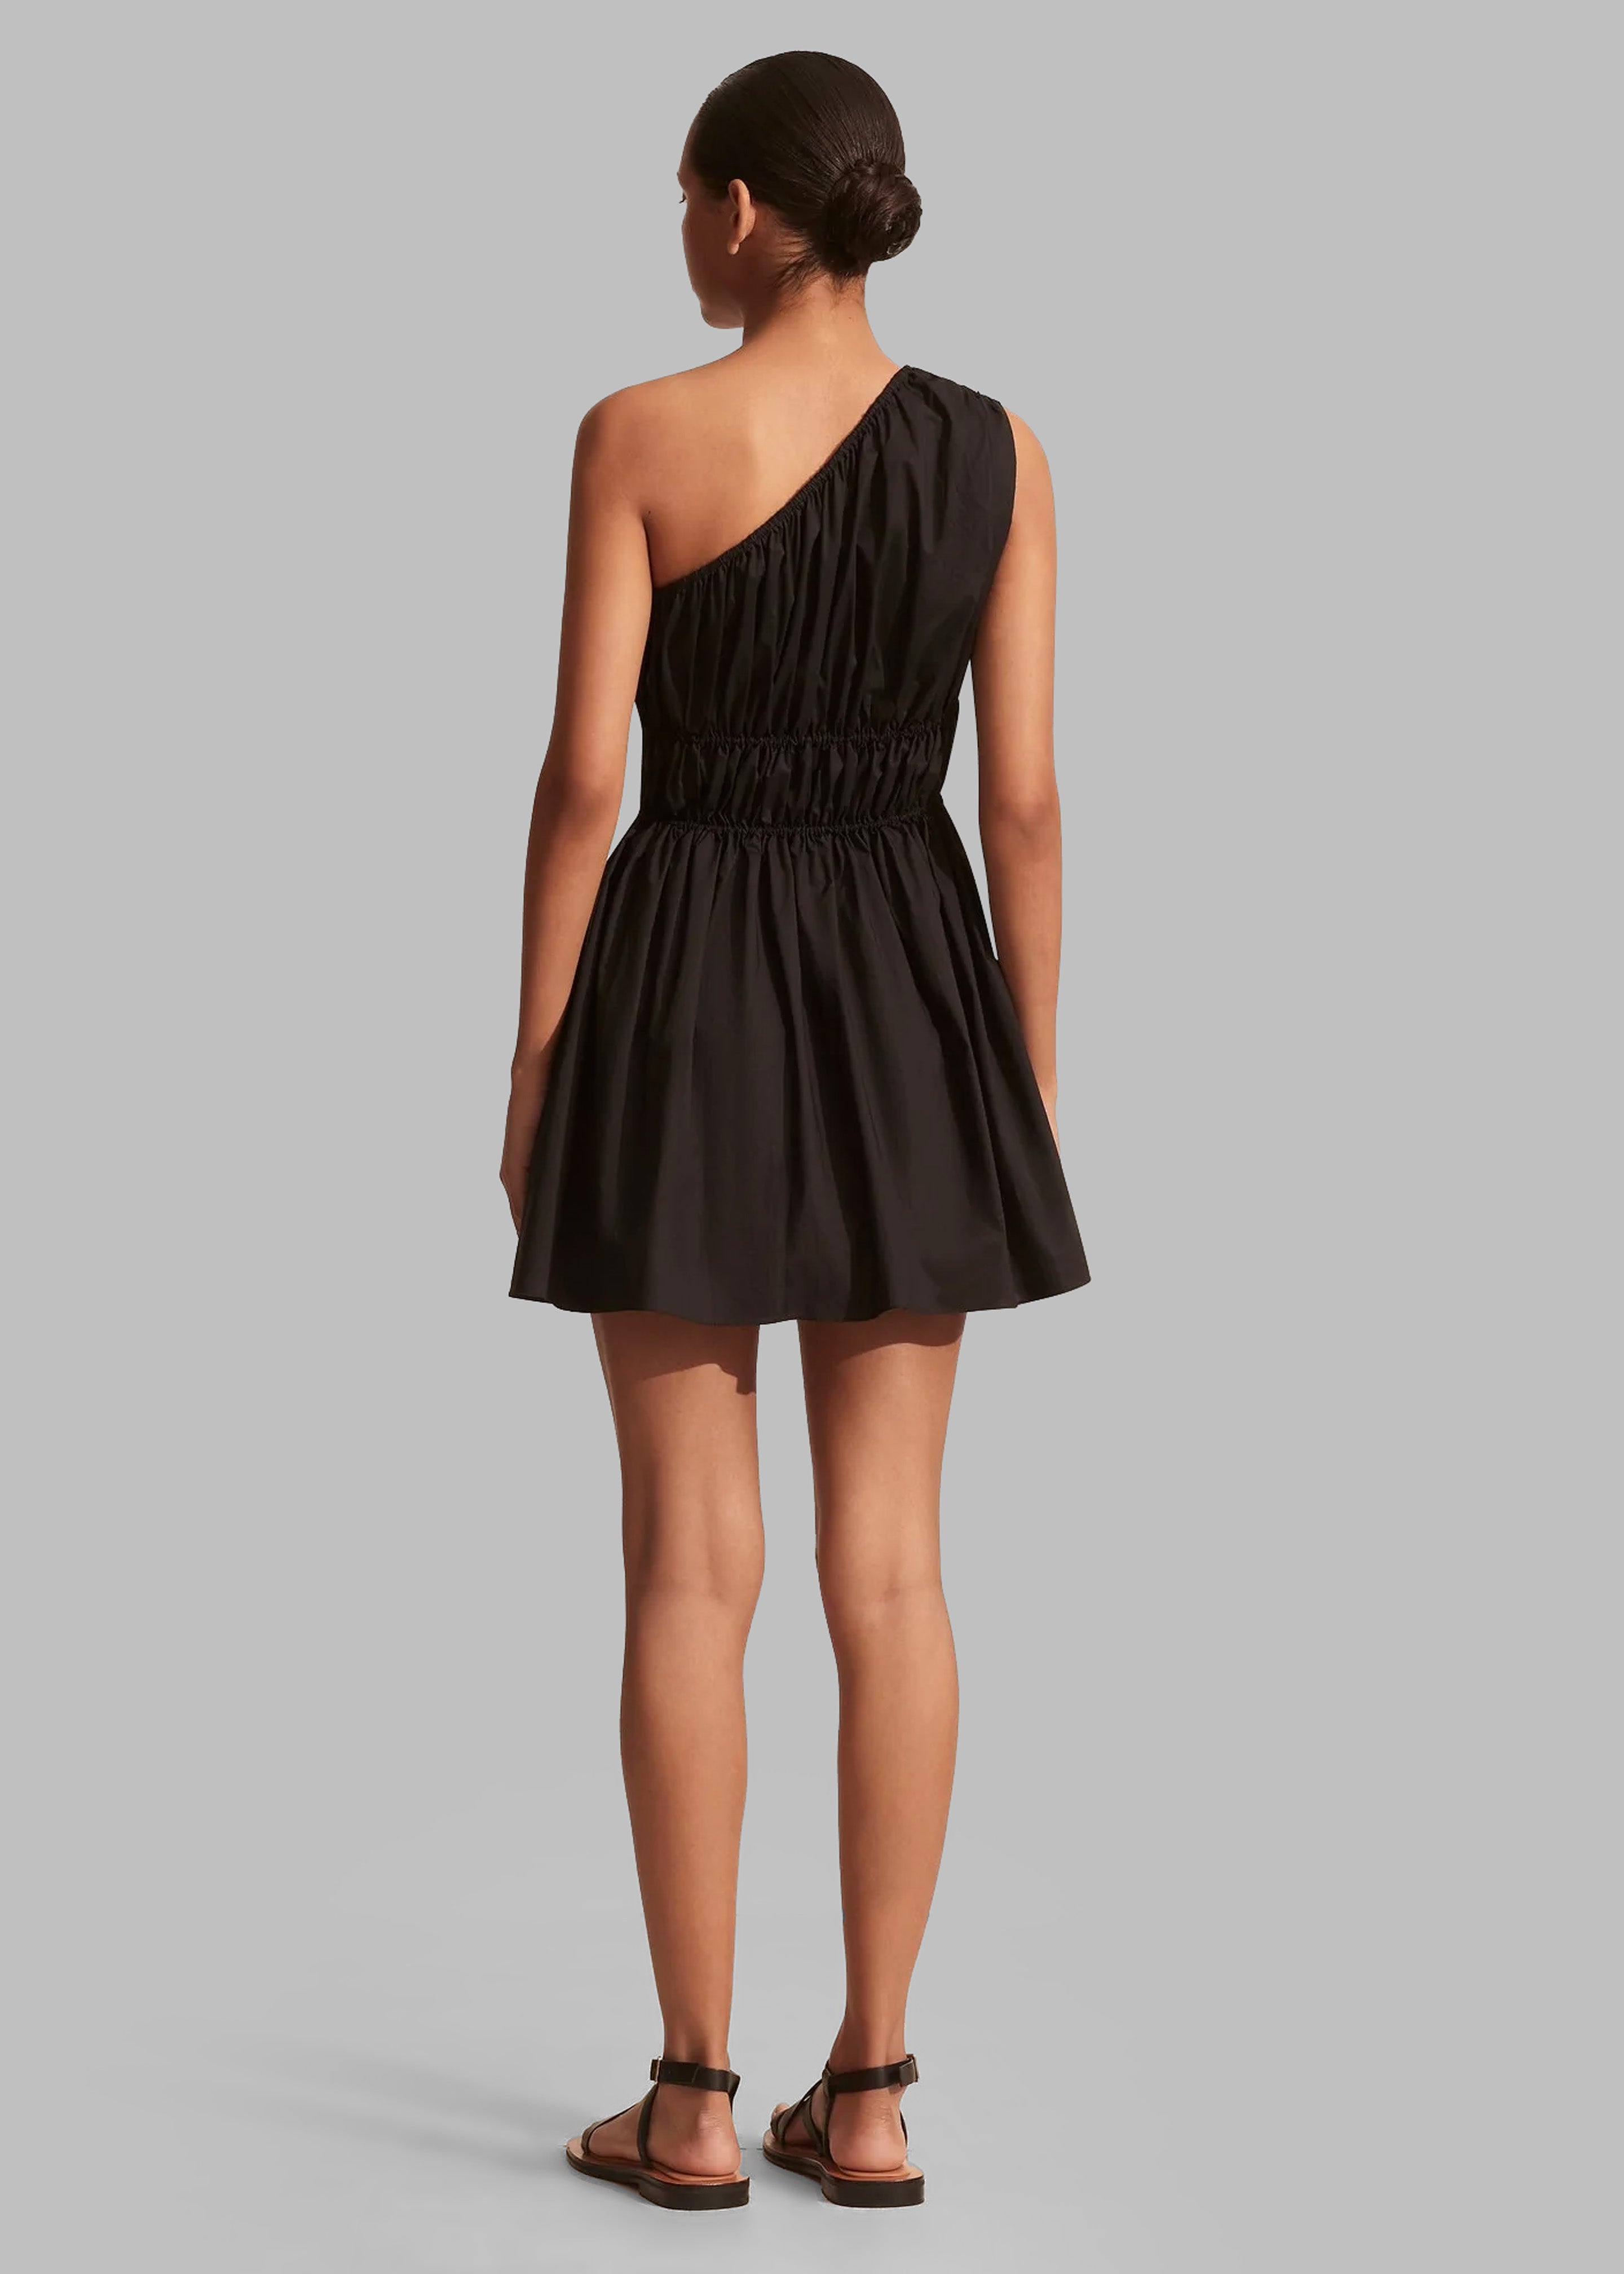 Matteau Shirred One Shoulder Mini Dress - Black - 4